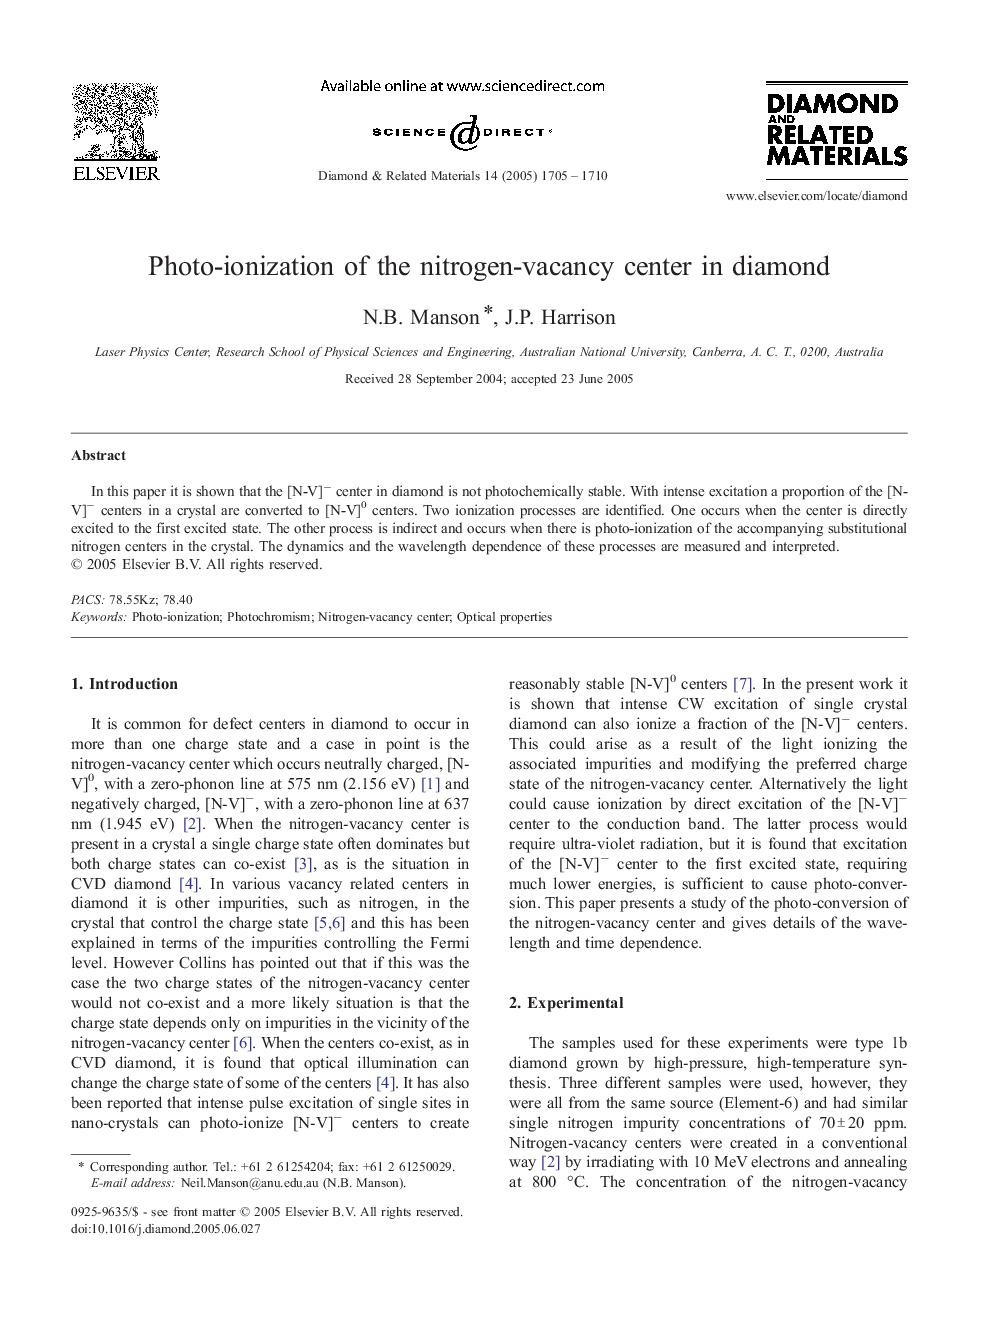 Photo-ionization of the nitrogen-vacancy center in diamond